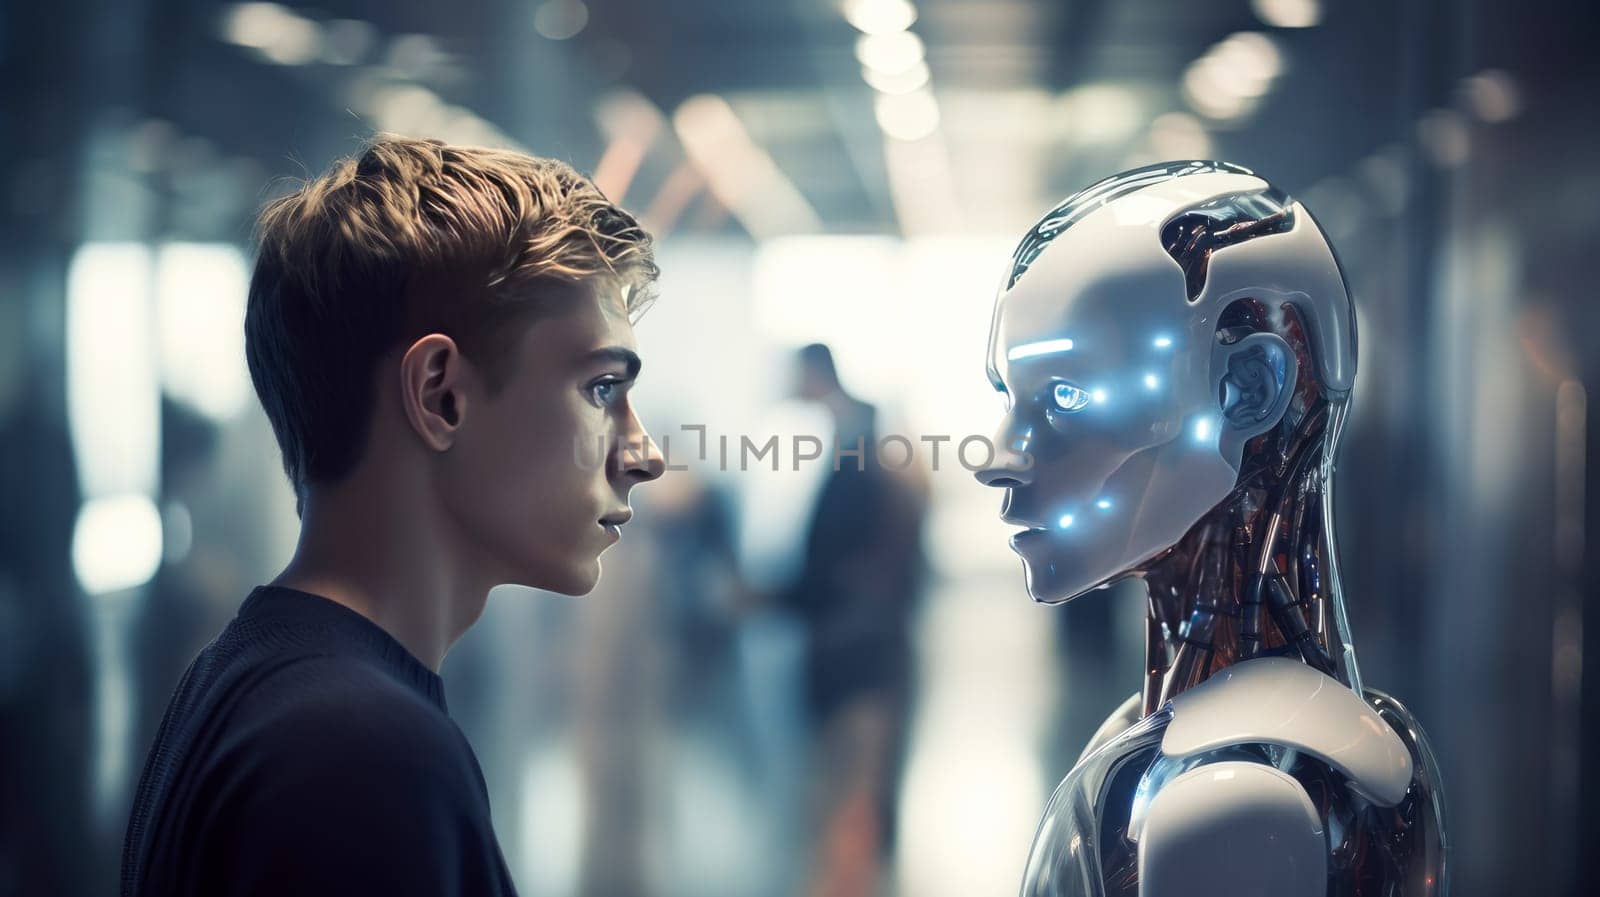 Man and robot AI chatbot technology of the future by Alla_Yurtayeva